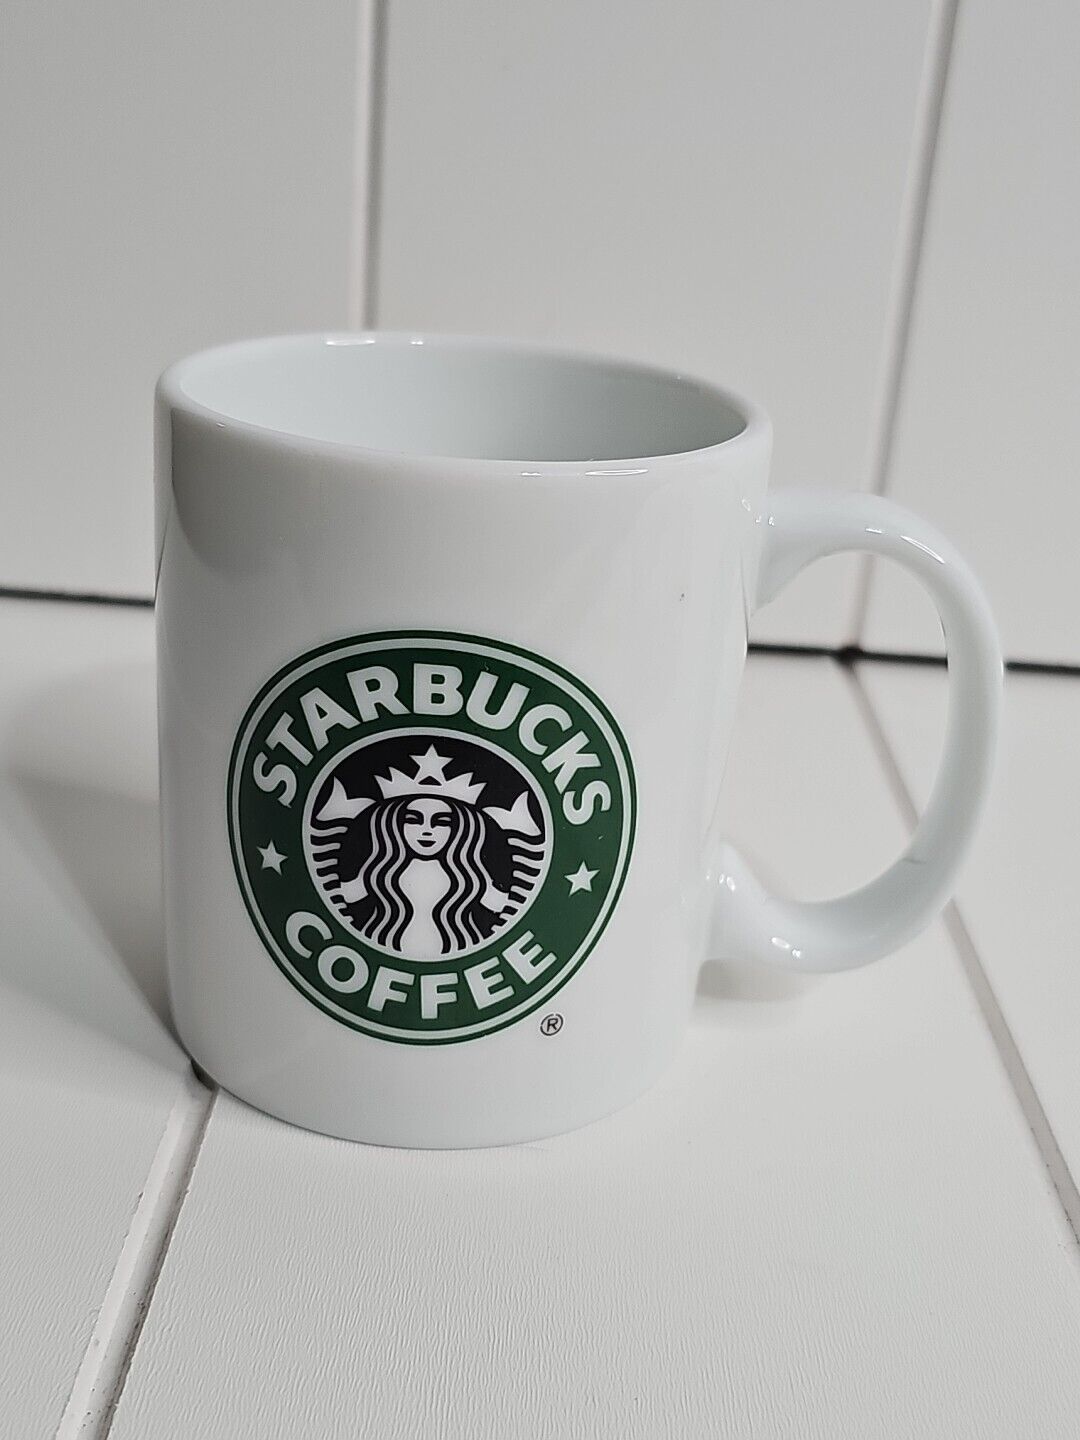 2005 Starbucks Coffee Company Mug Cup 12 oz